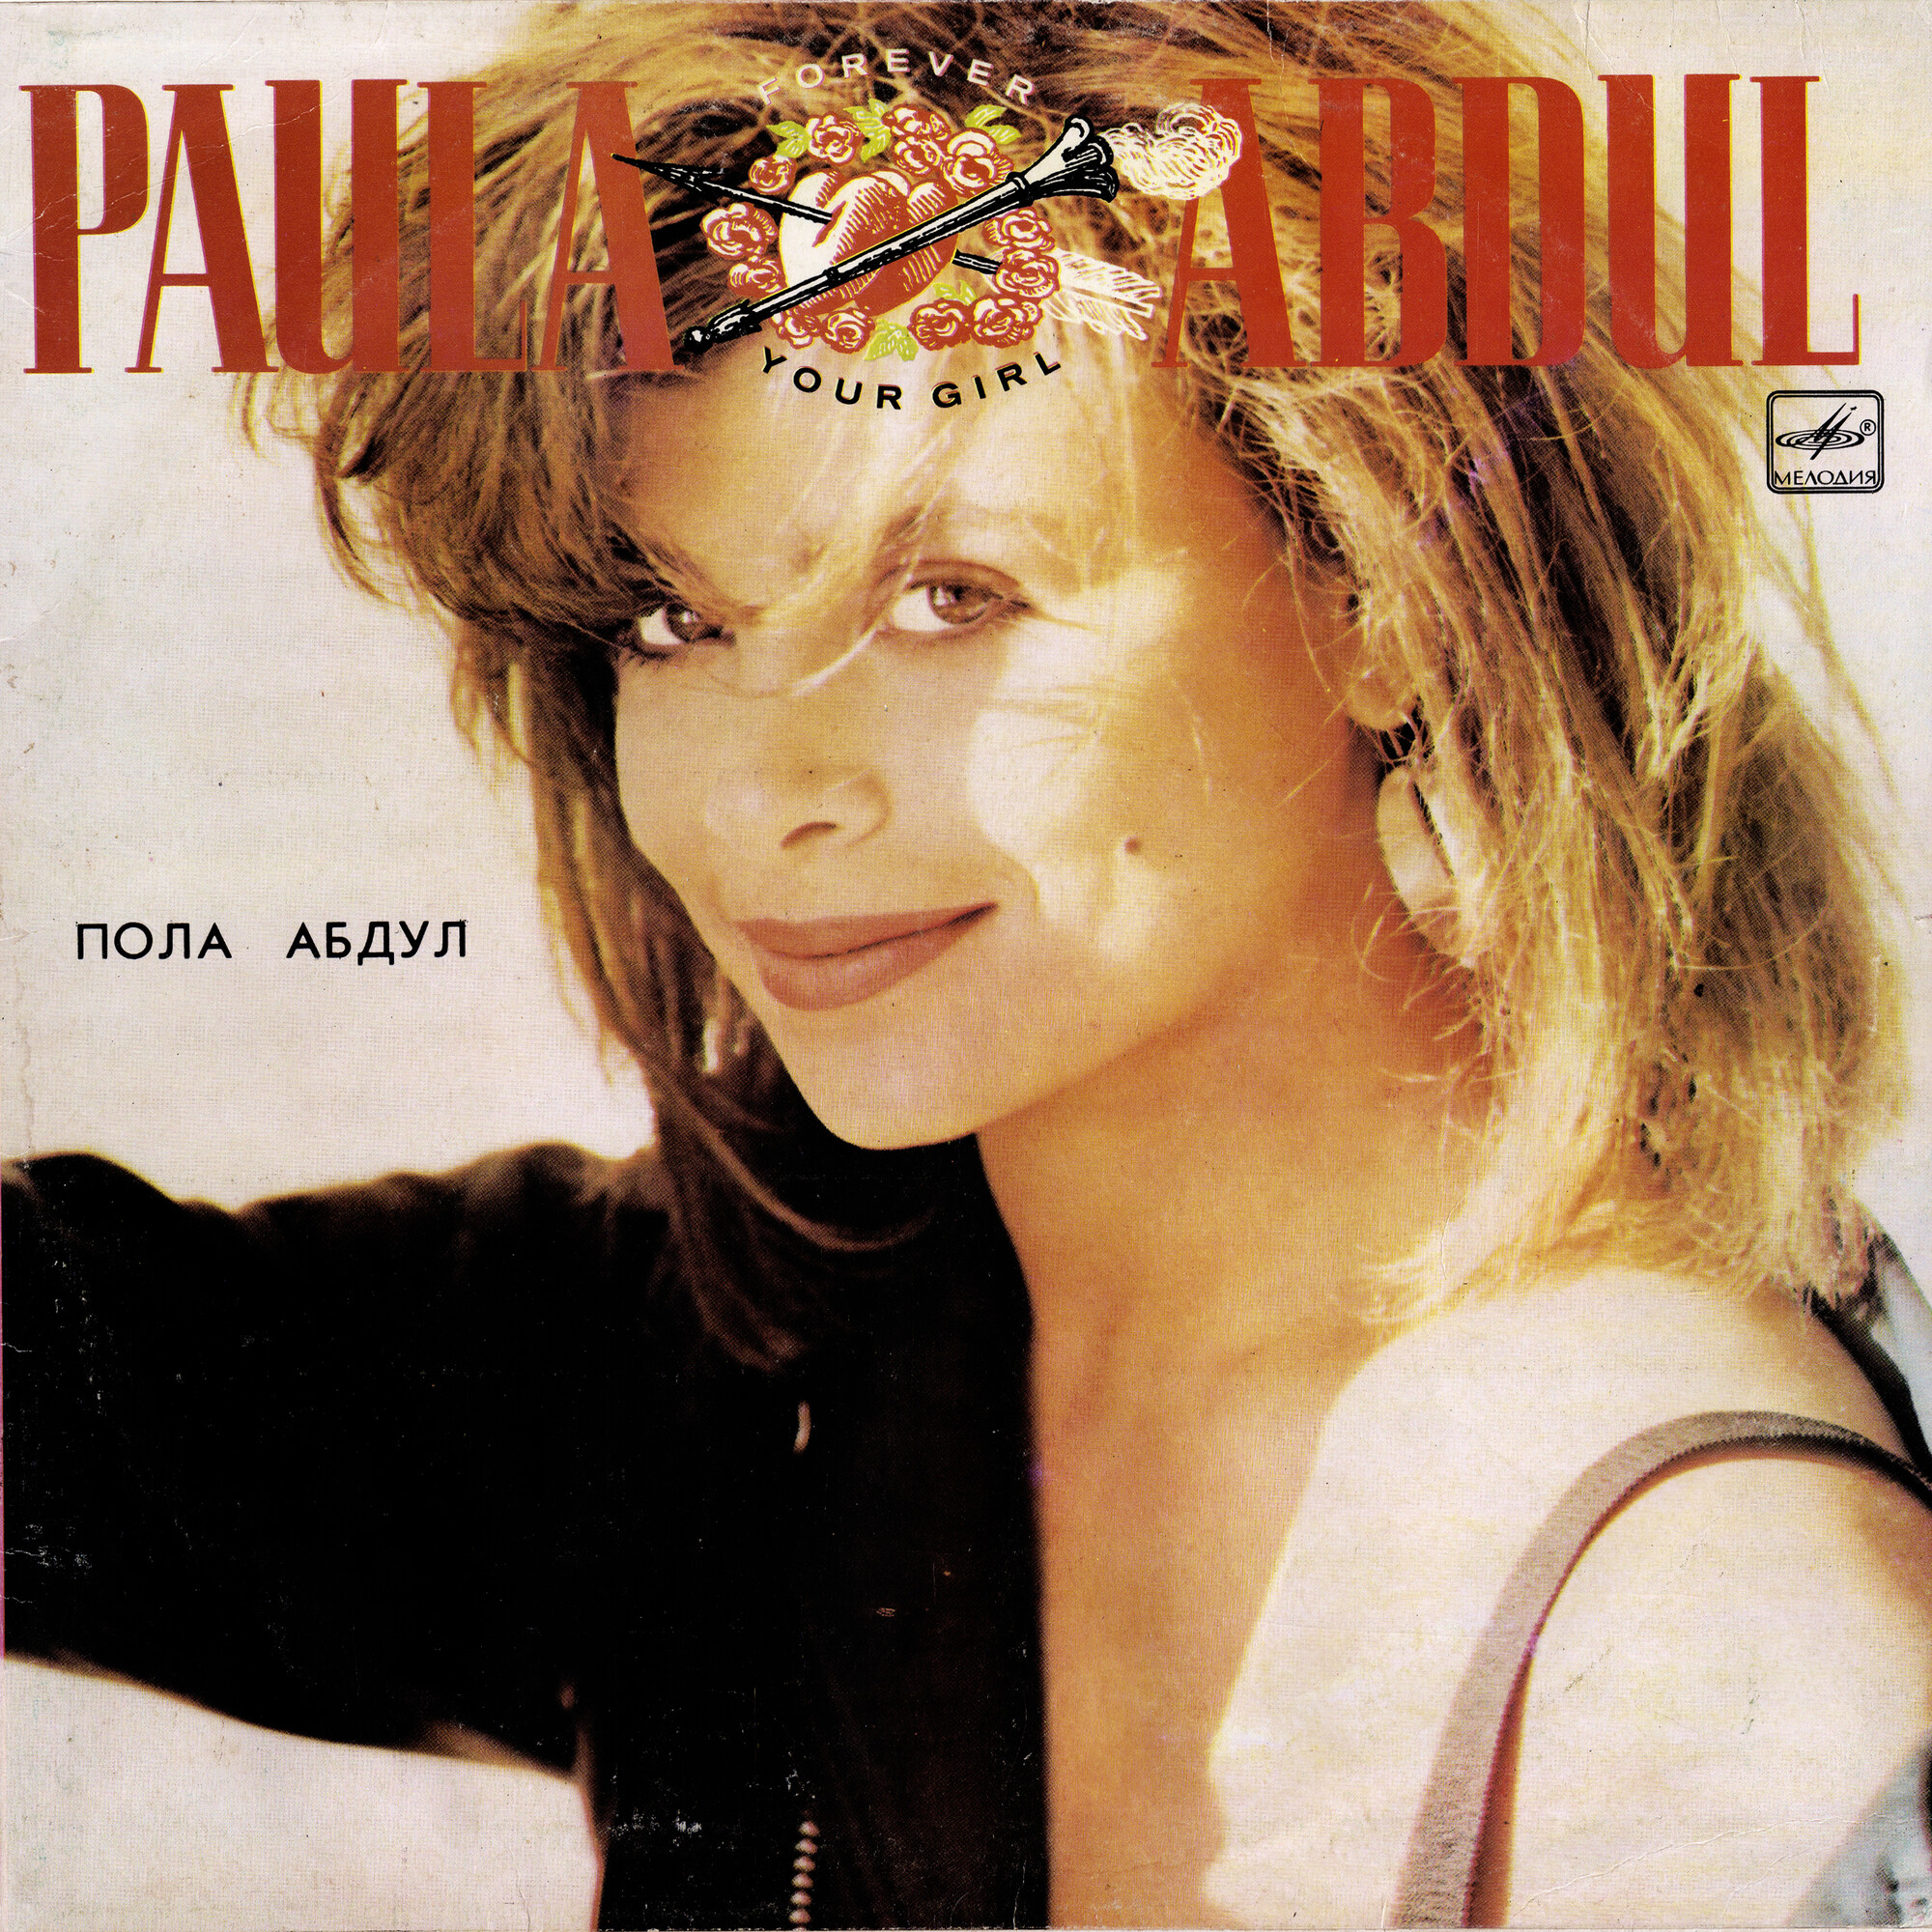 Пола Абдул - Forever Your Girl